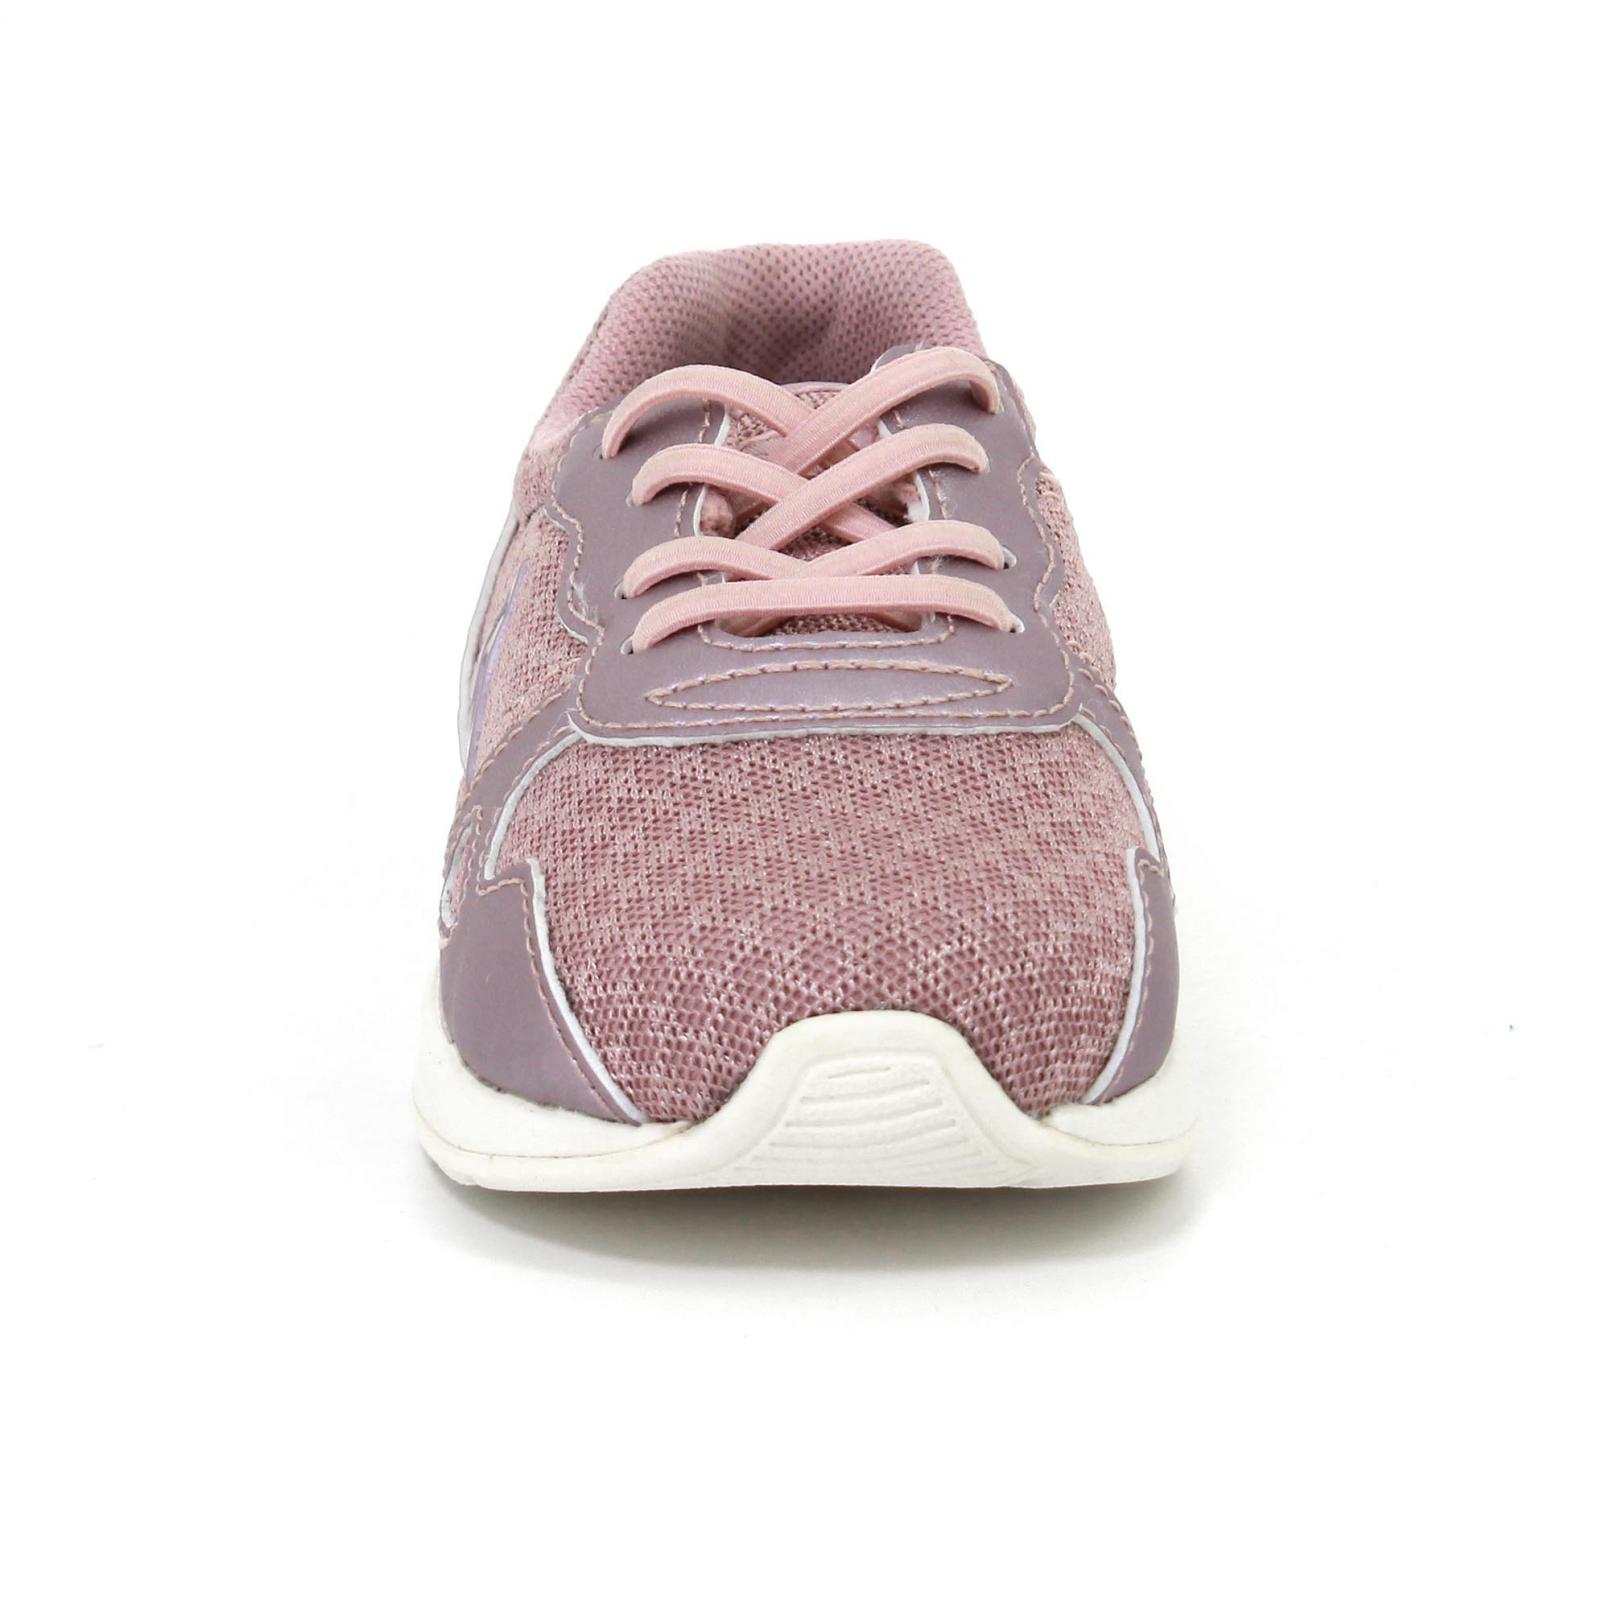 Shoes – Le Coq Sportif Lcs R600 Inf Feminine Mesh/Metallic Pink/Pink